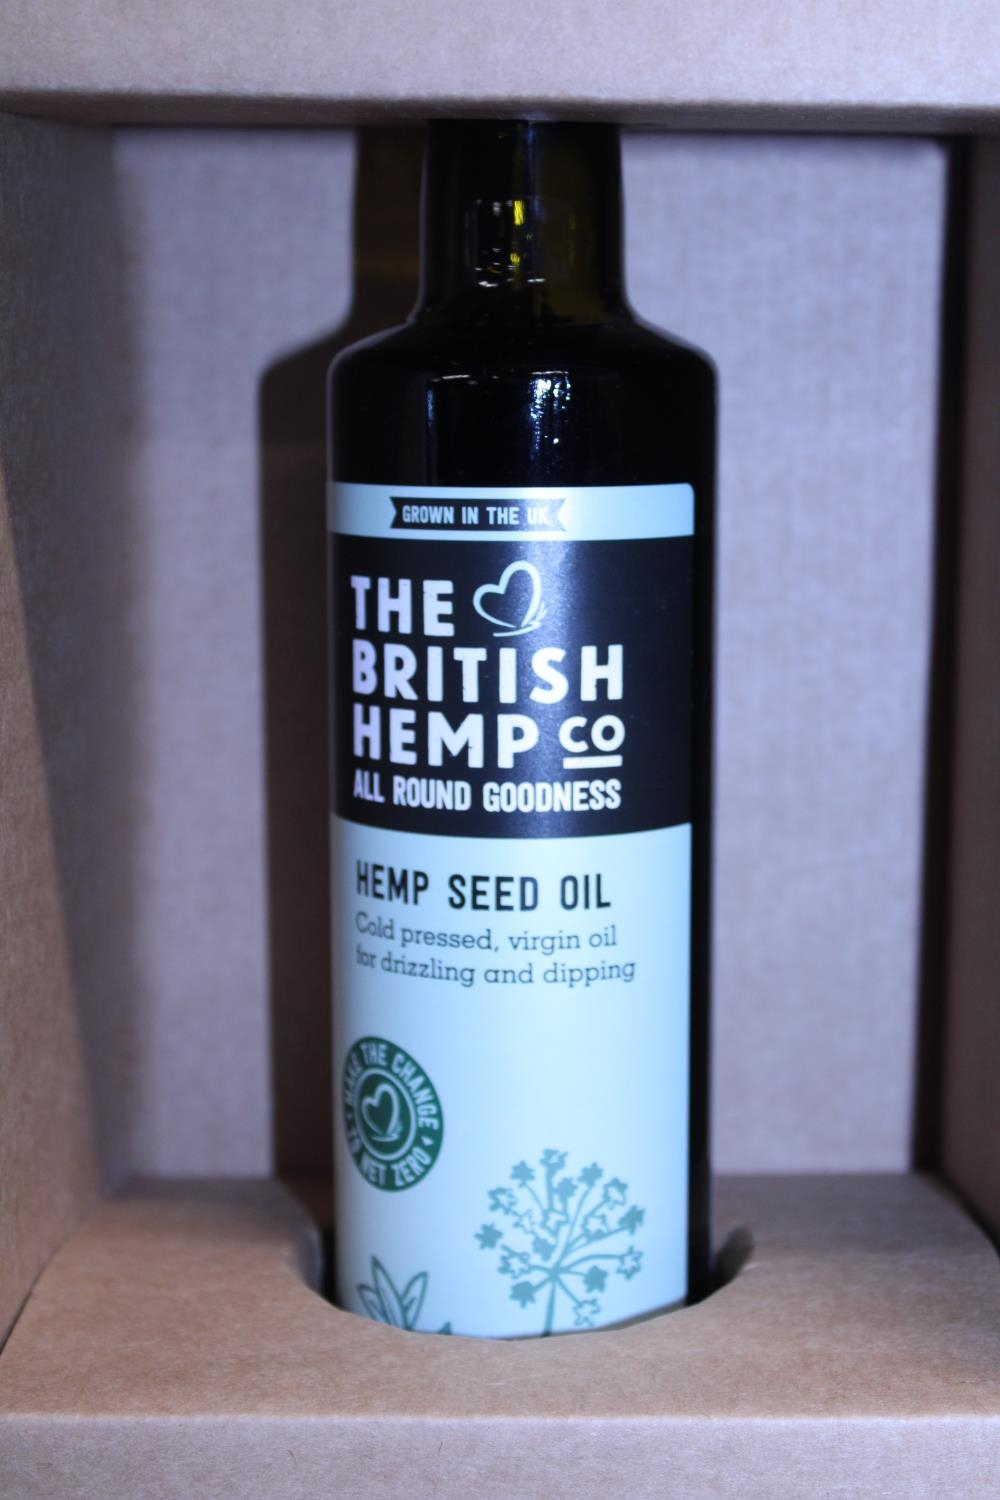 Three boxed bottles of new Hemp Seed oil